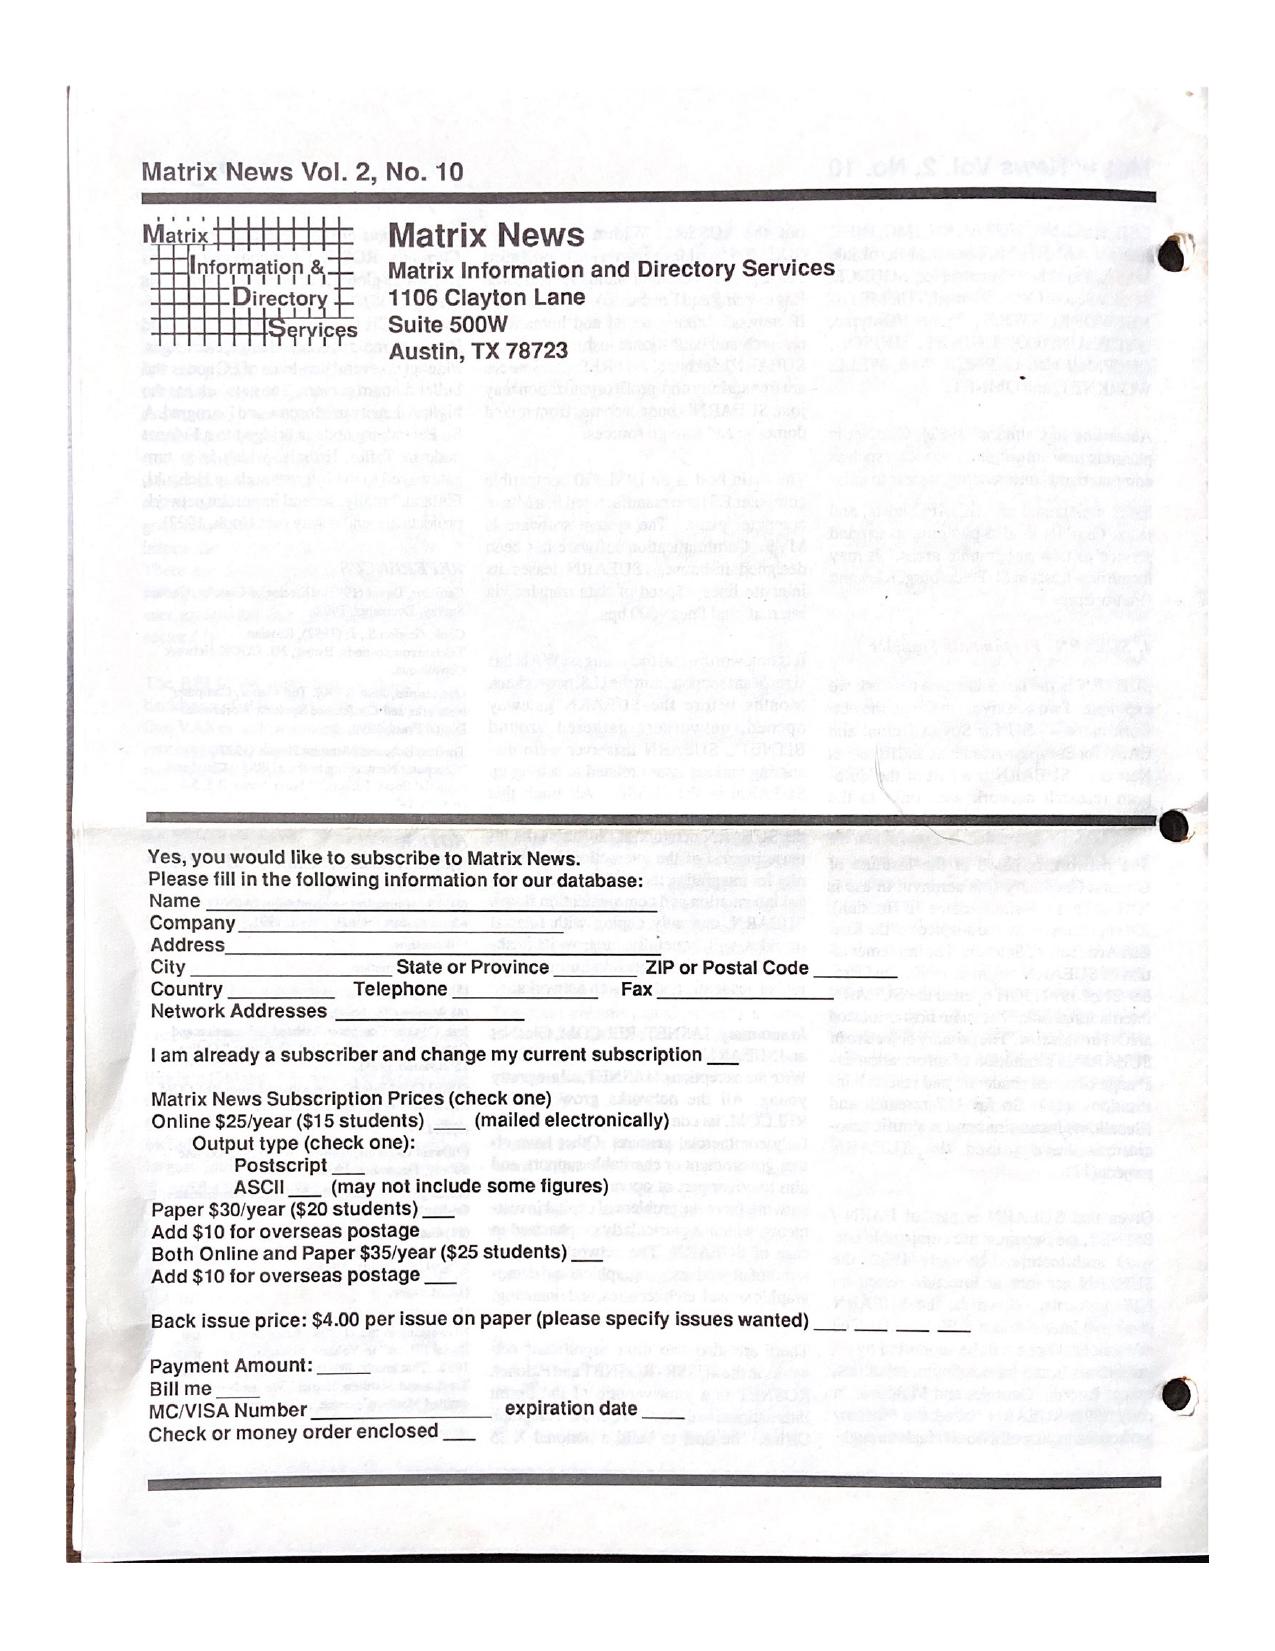 Matrix News subsription form